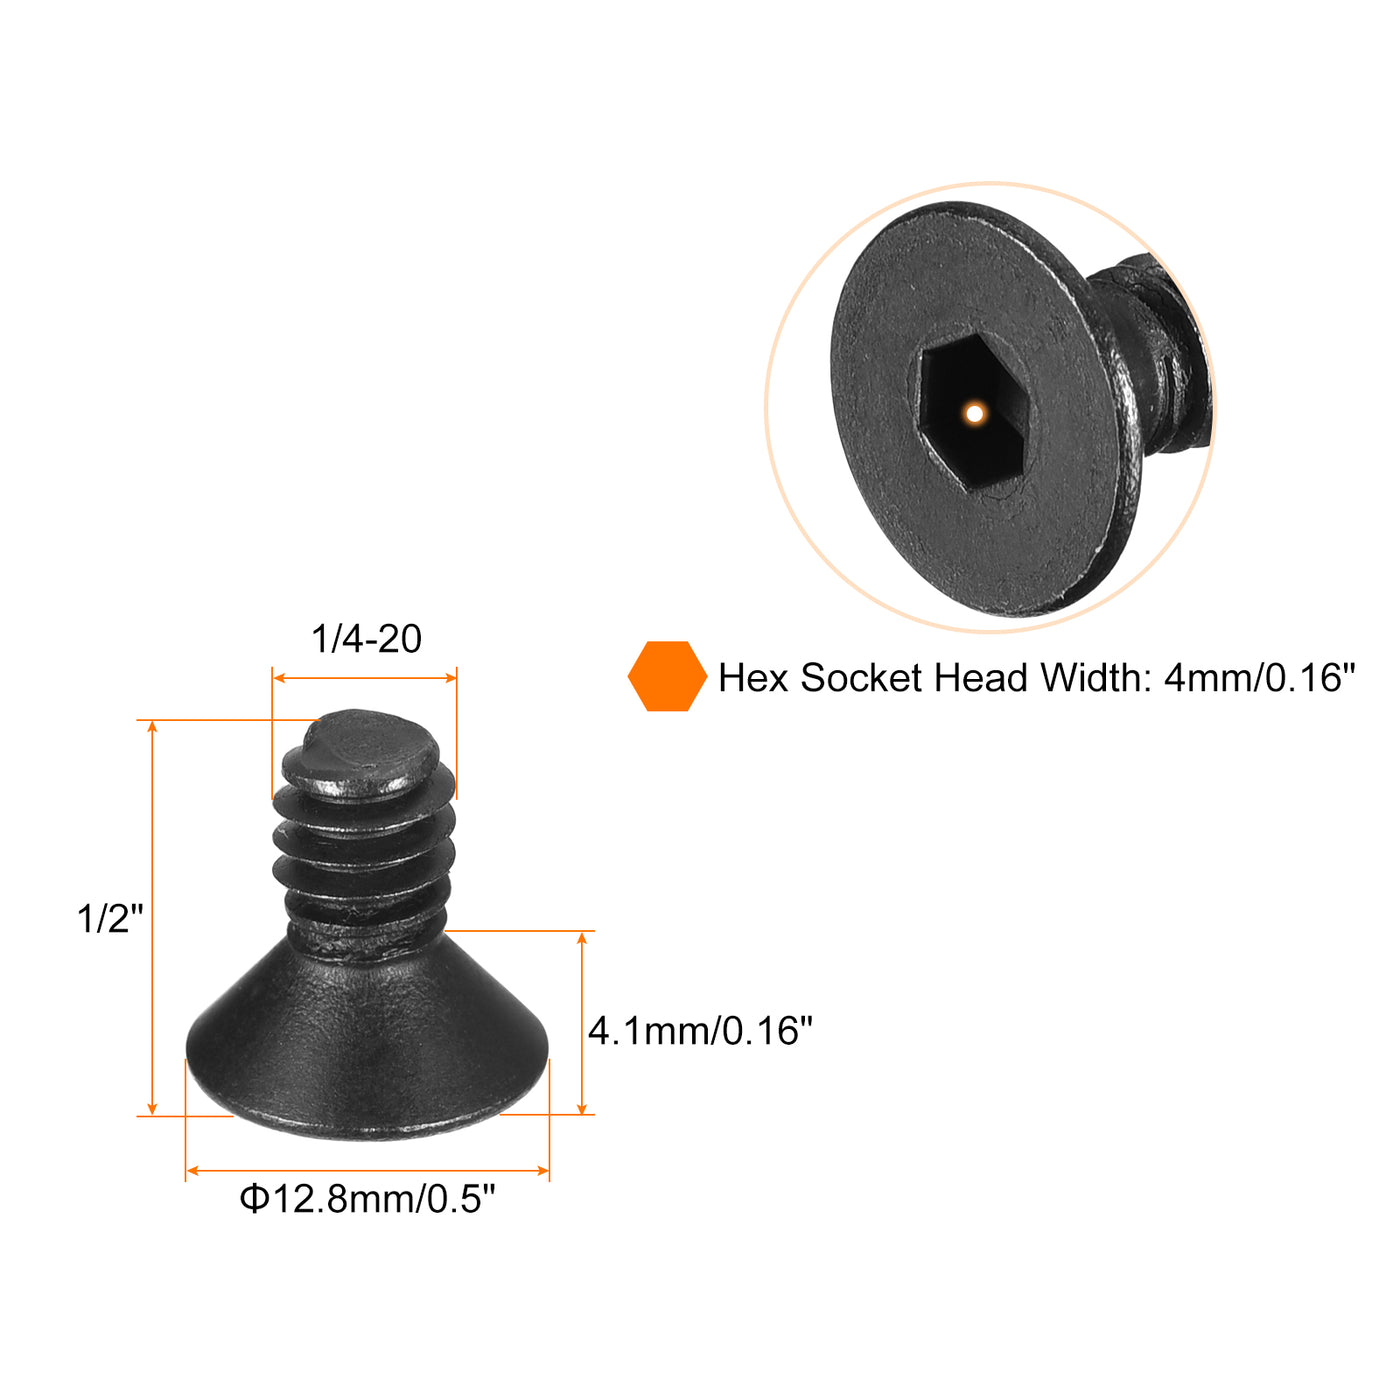 uxcell Uxcell 1/4-20x1/2" Flat Head Socket Cap Screws, 10.9 Grade Carbon Steel, 20PCS